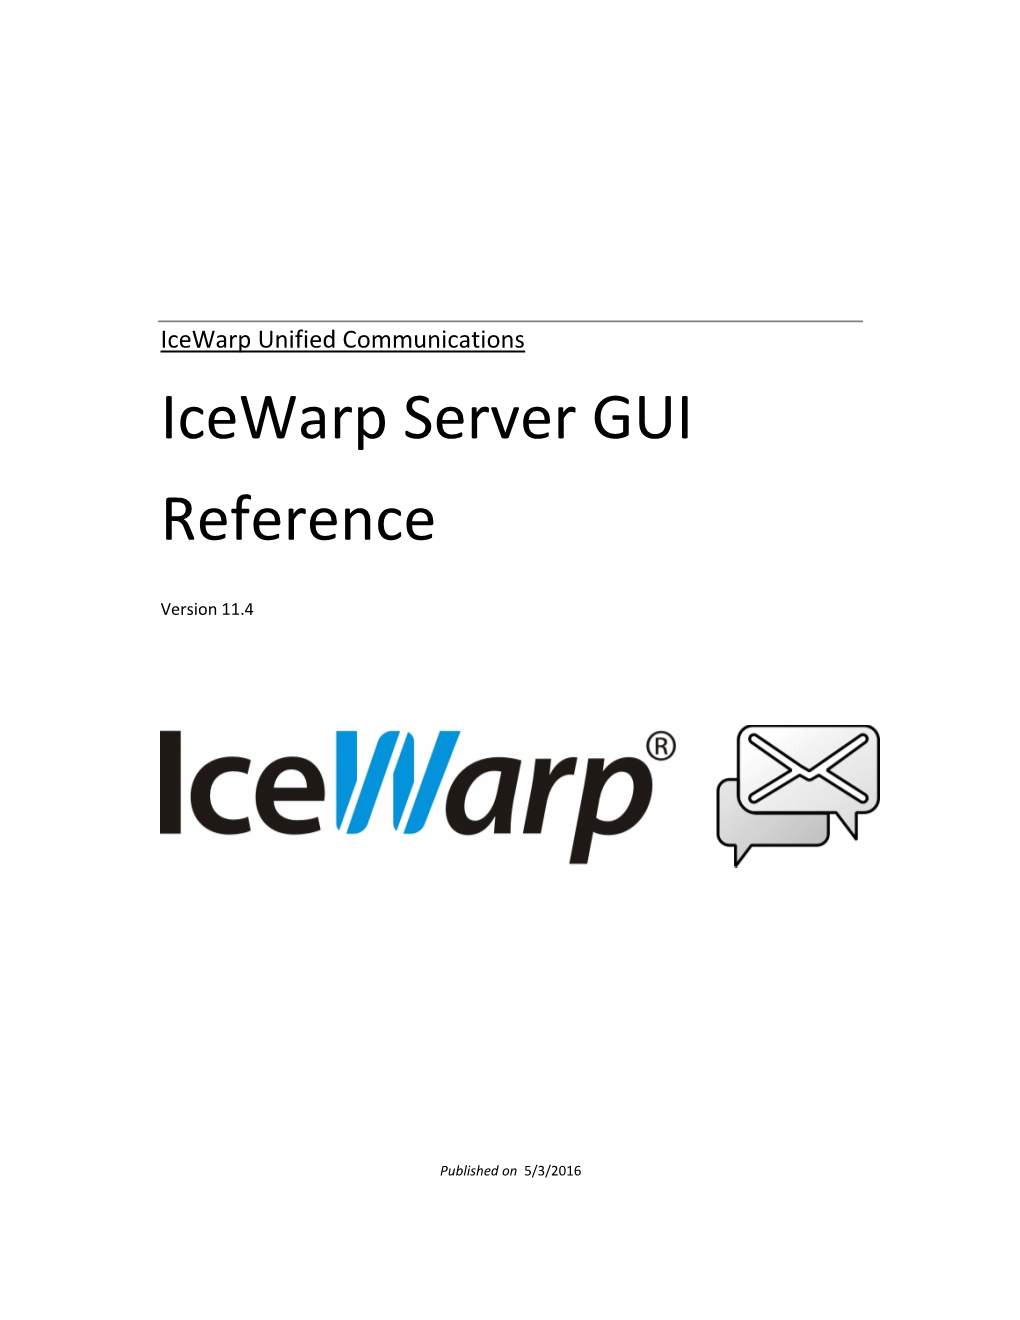 Icewarp Server GUI Reference